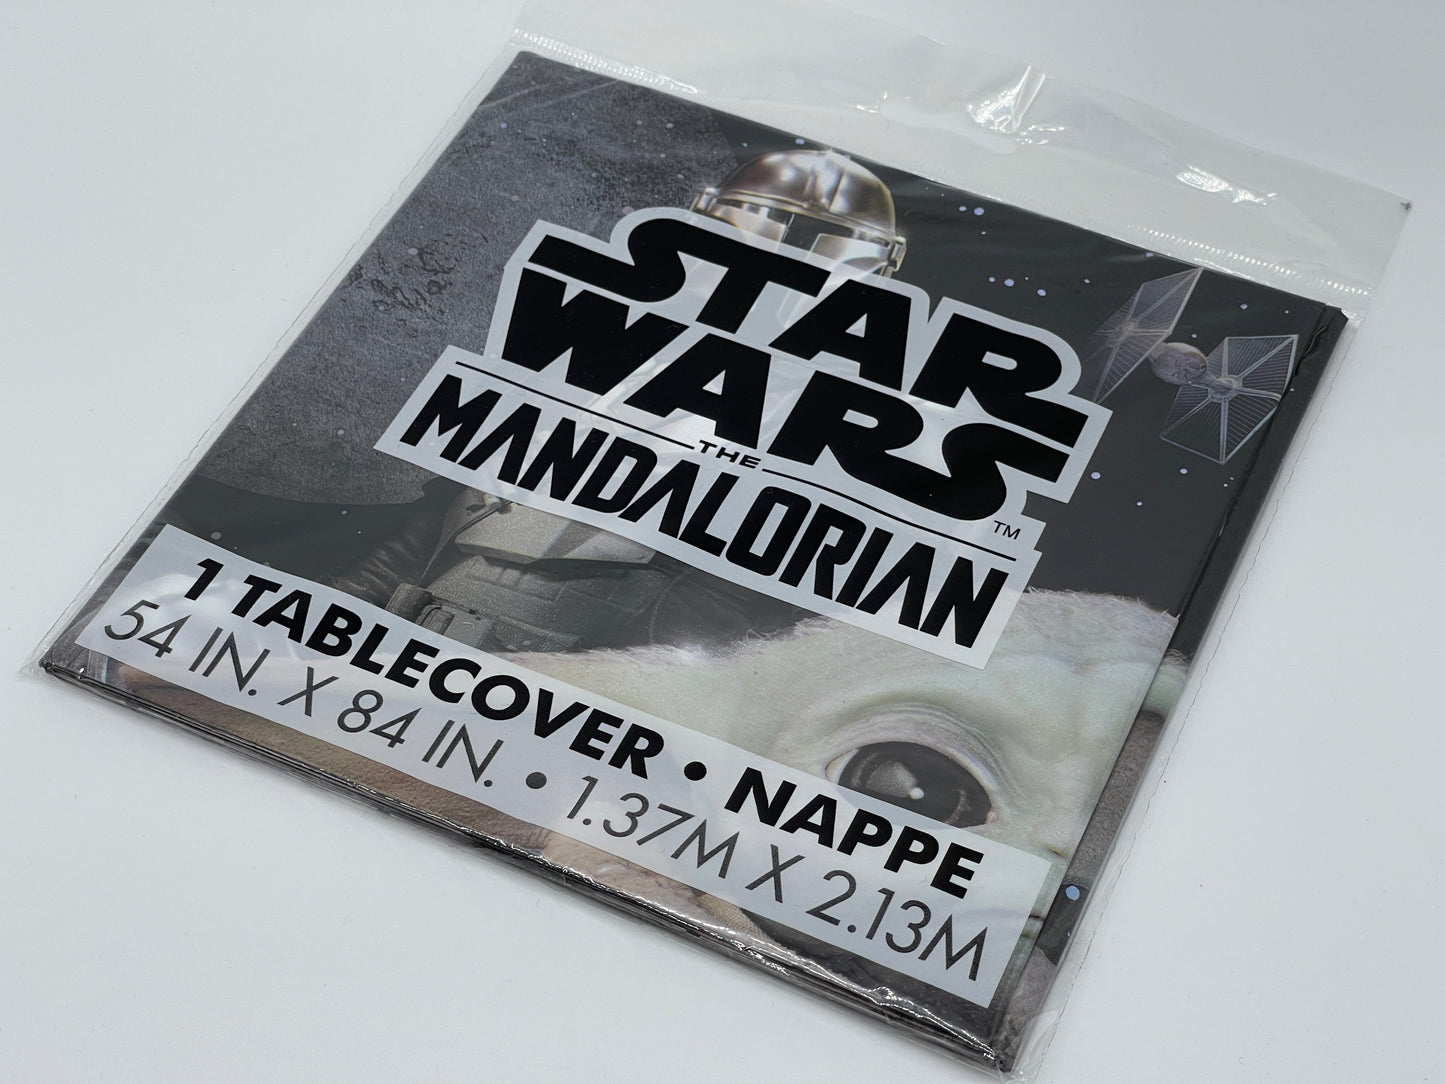 Star Wars Mandalorian Party Birthday Plastic Tablecloth (1.37m x 2.13m) 